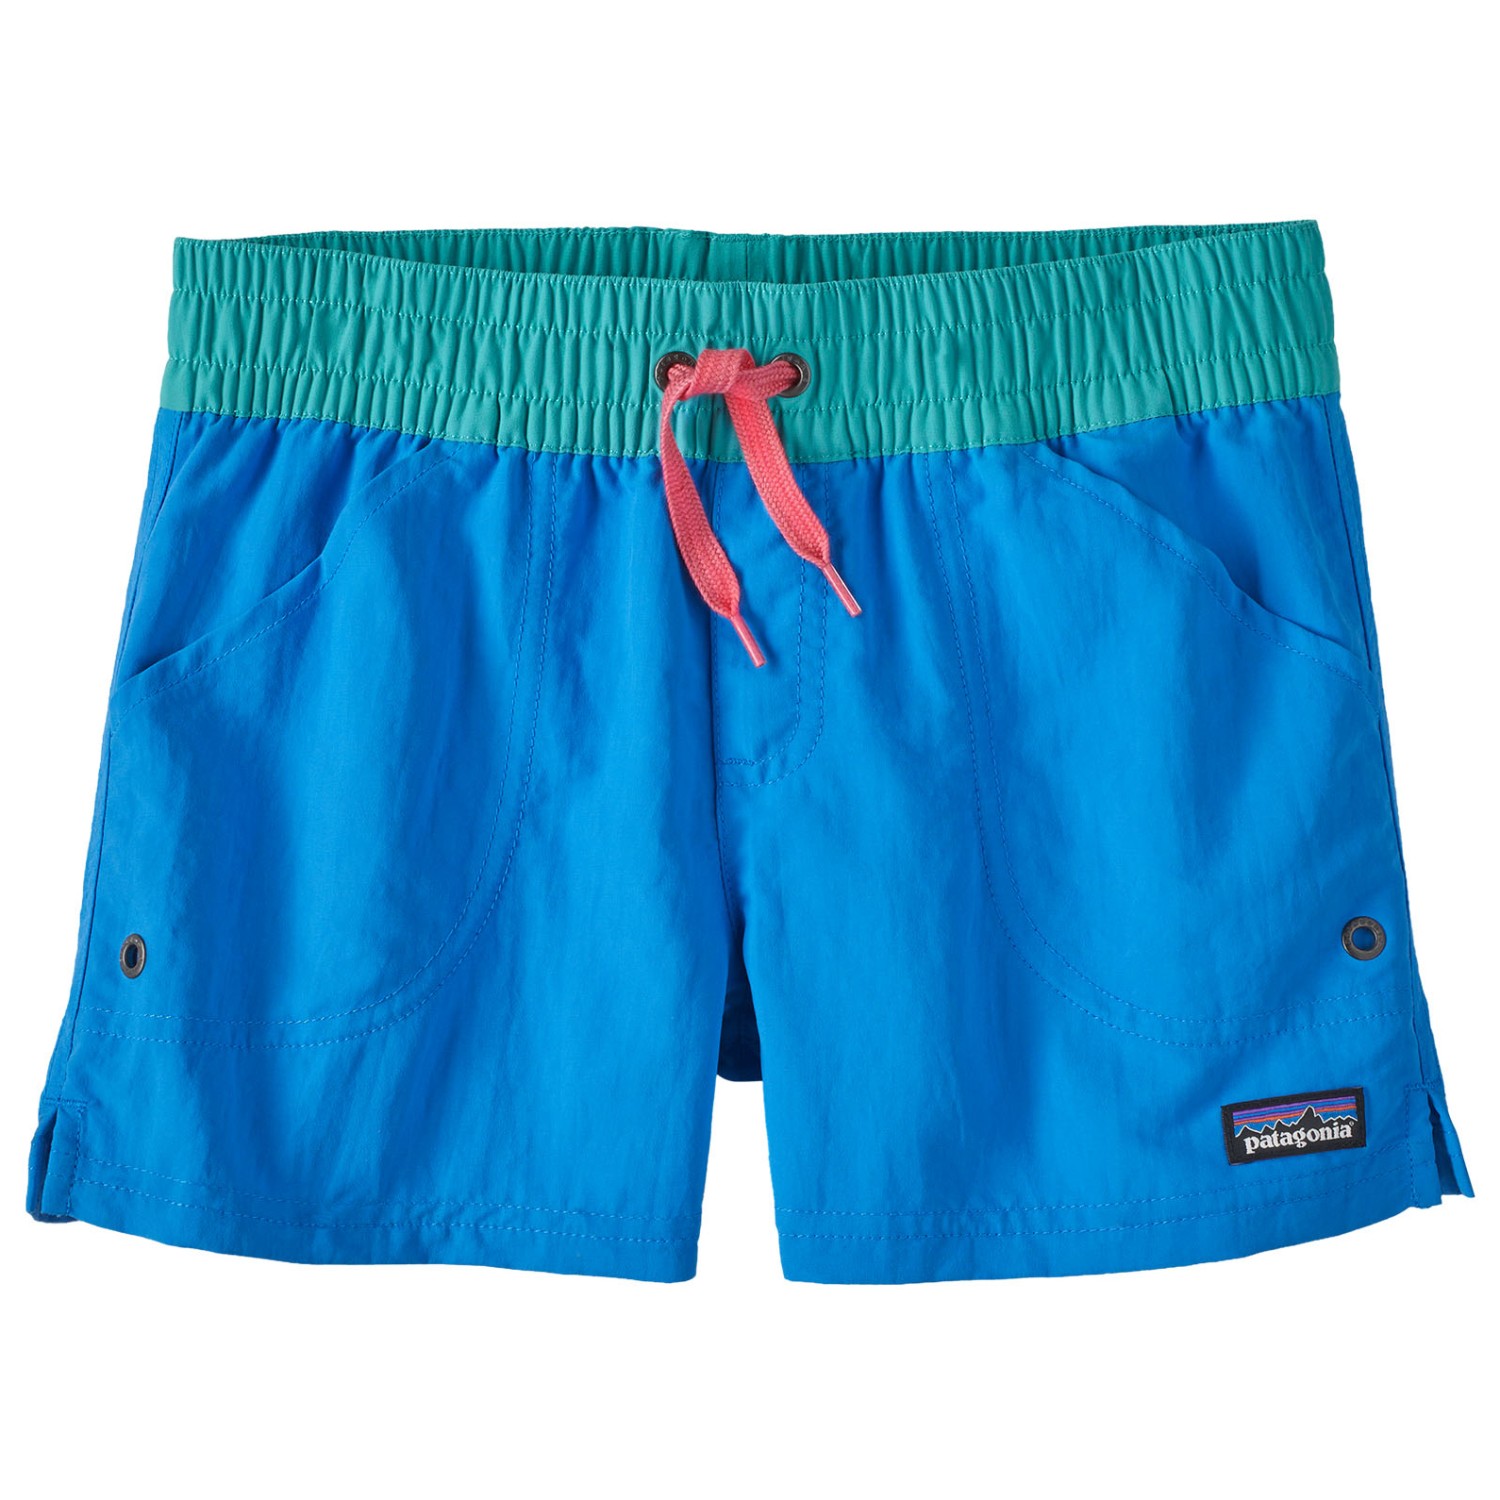 Шорты Patagonia Girl's Costa Rica Baggies Shorts, цвет Vessel Blue цена и фото